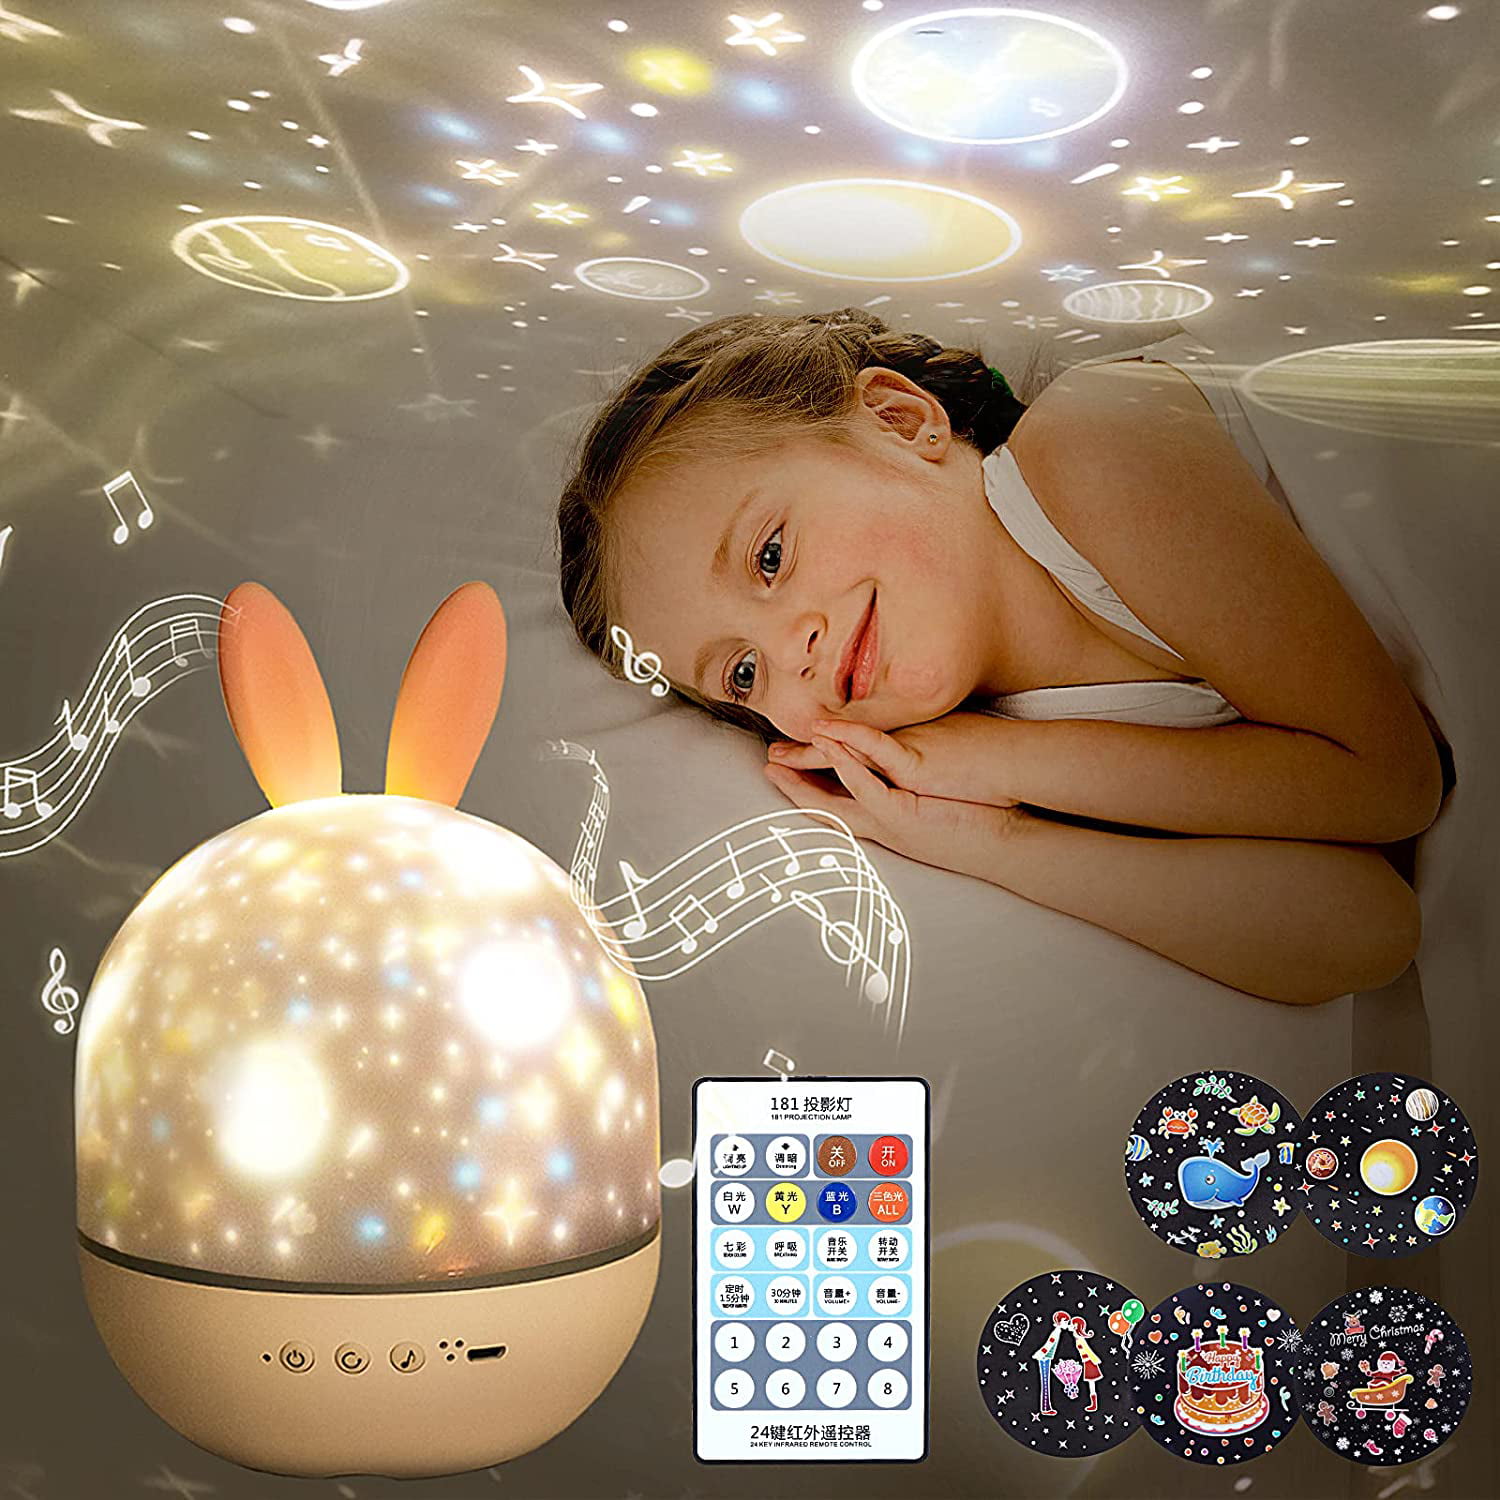 Musical Kids Baby Bedroom Cot Mobile Nightlight Show Star Projector Best Gift P2 